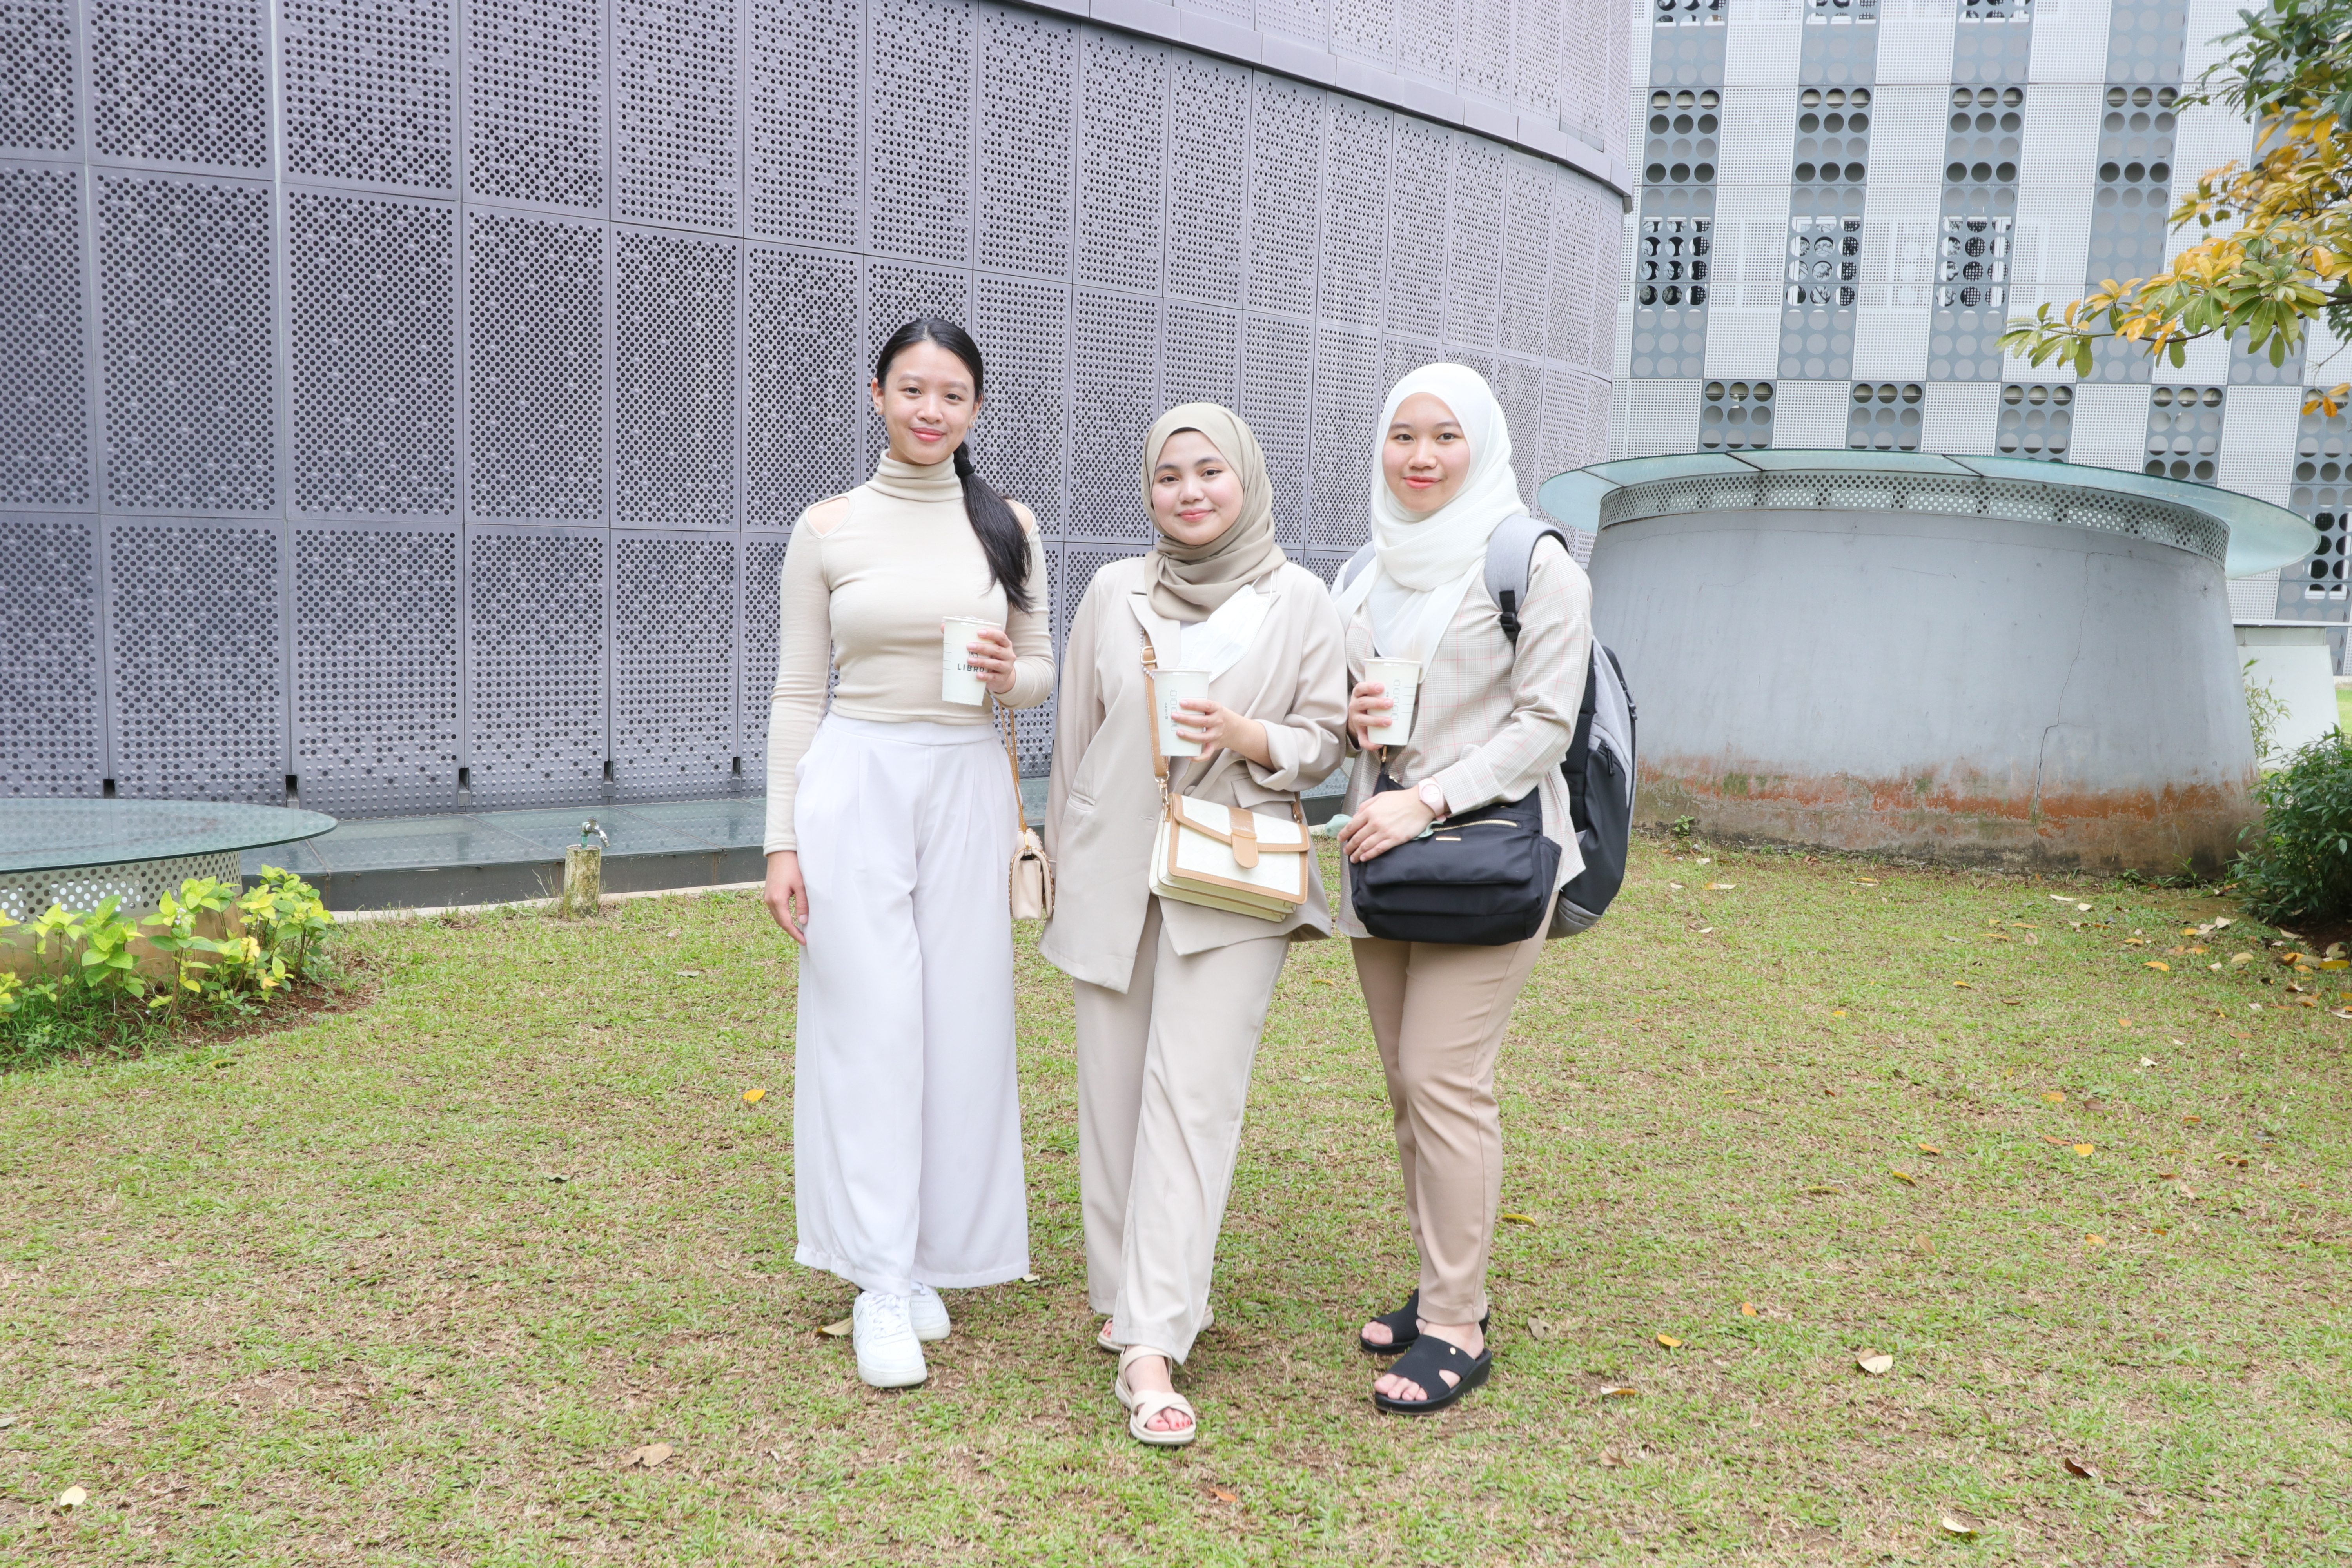 UMN Welcomes International Students from Brunei Darussalam